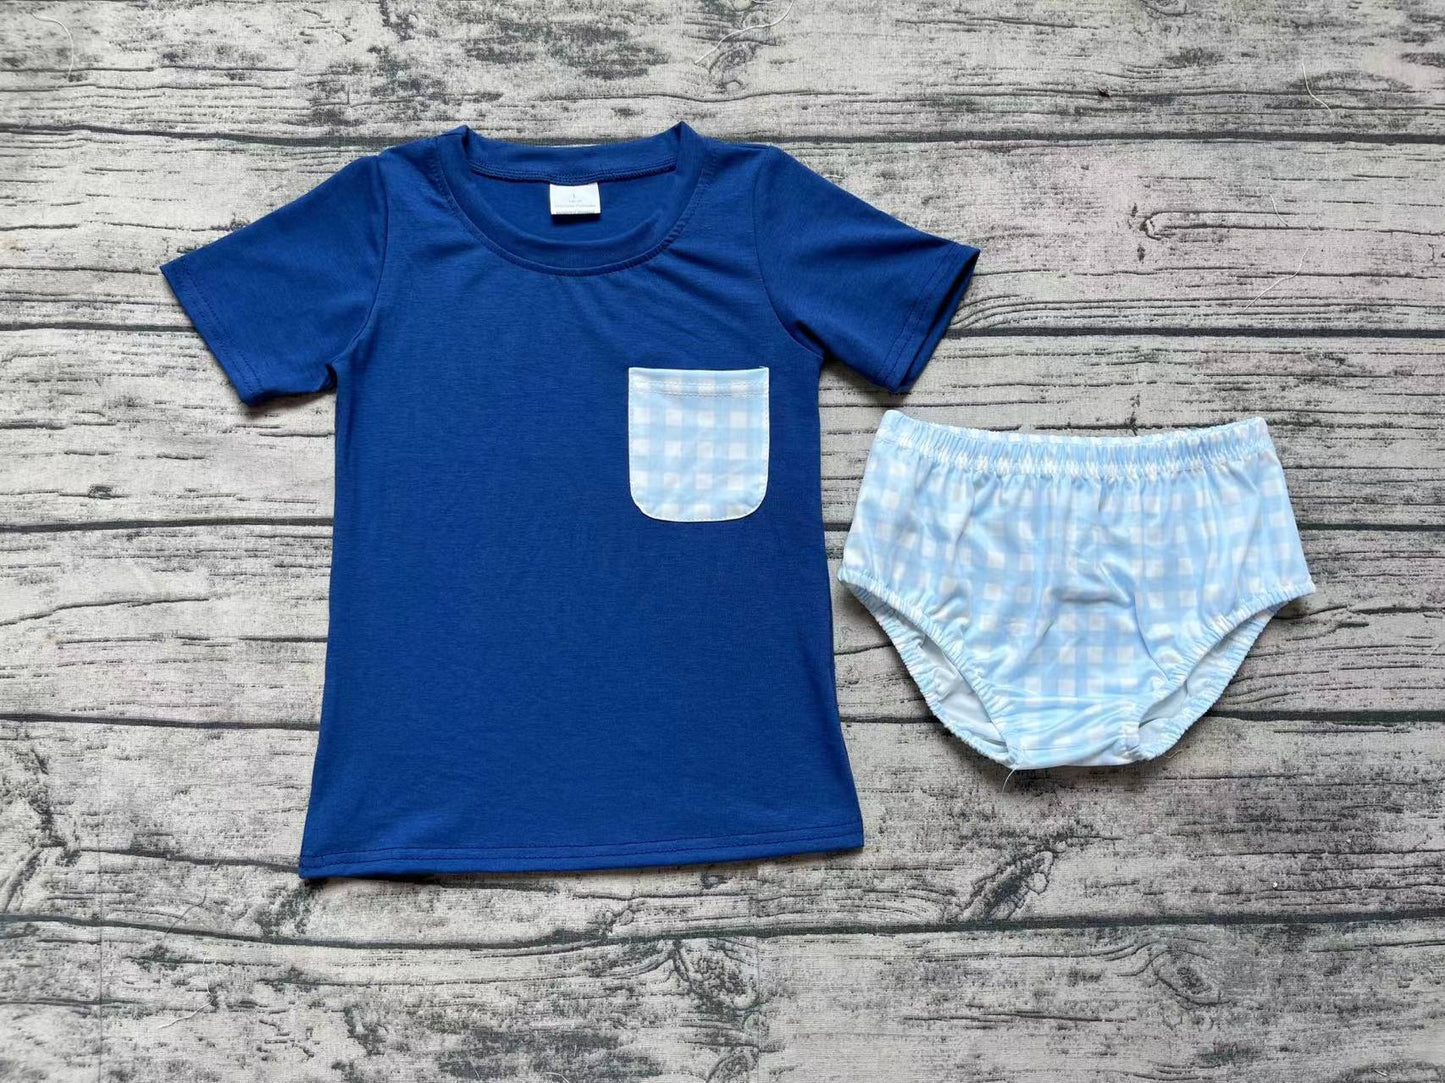 Baby Boys Navy Pocket Top Bummies Clothes Sets Preorder